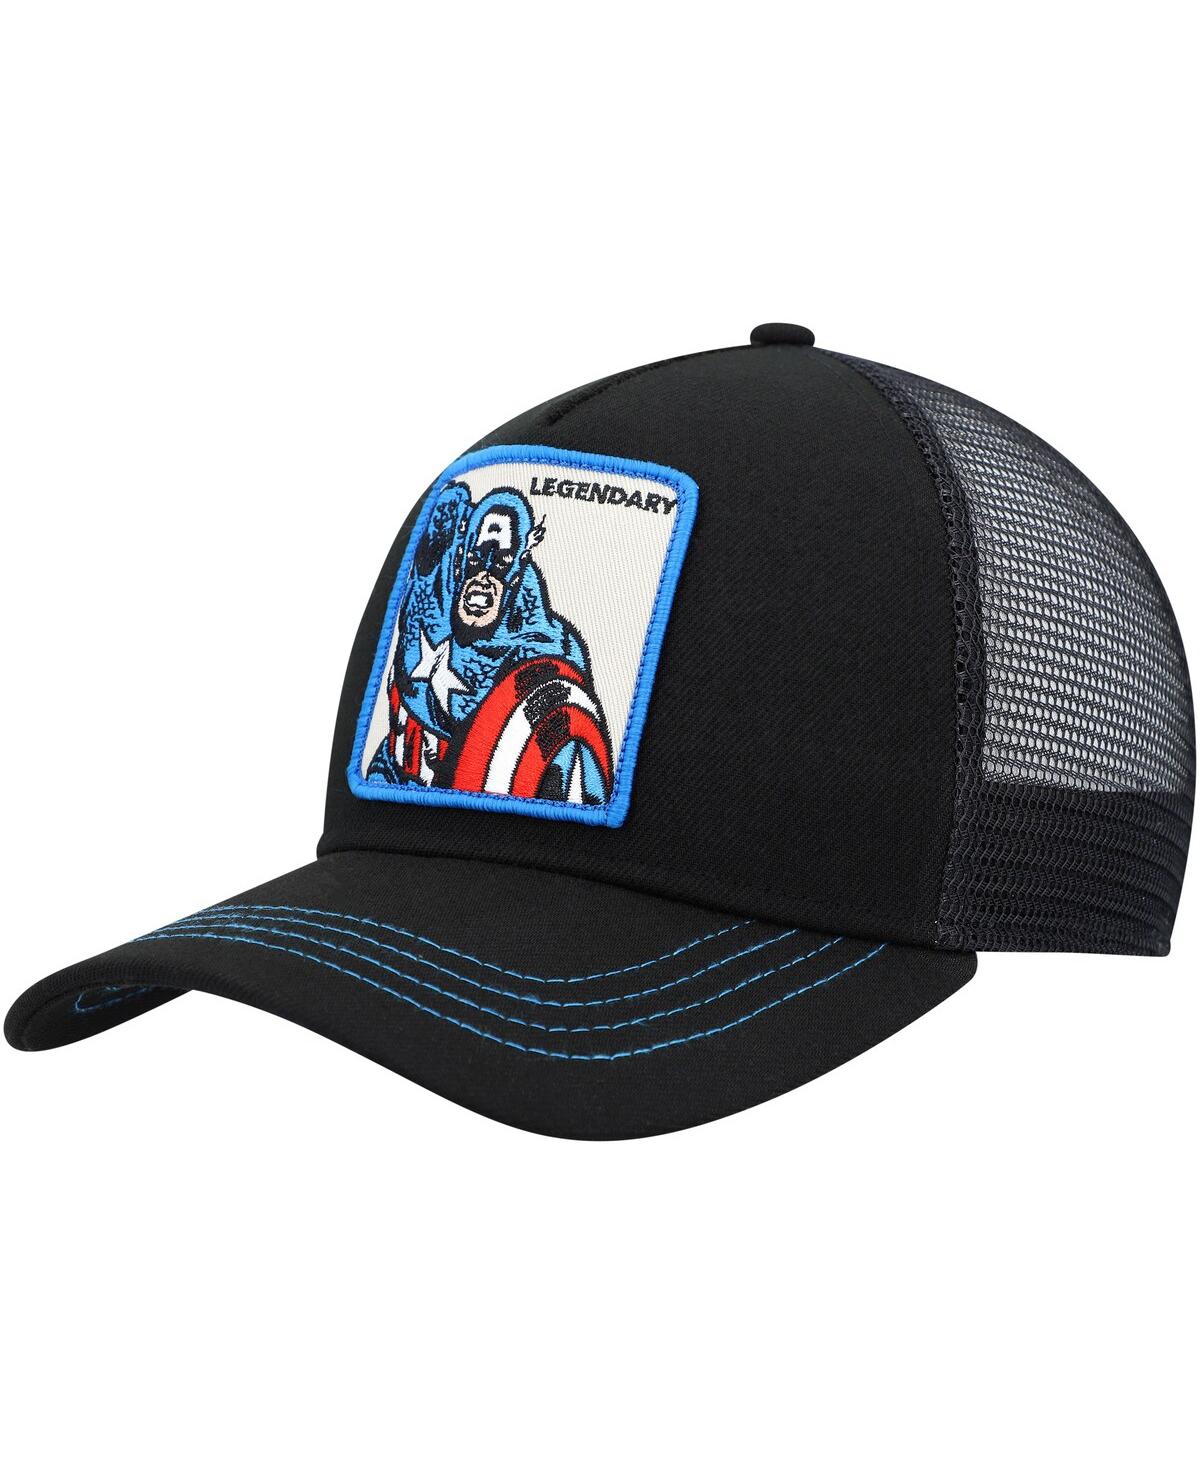 Men's Black Captain America Retro A-Frame Snapback Hat - Black